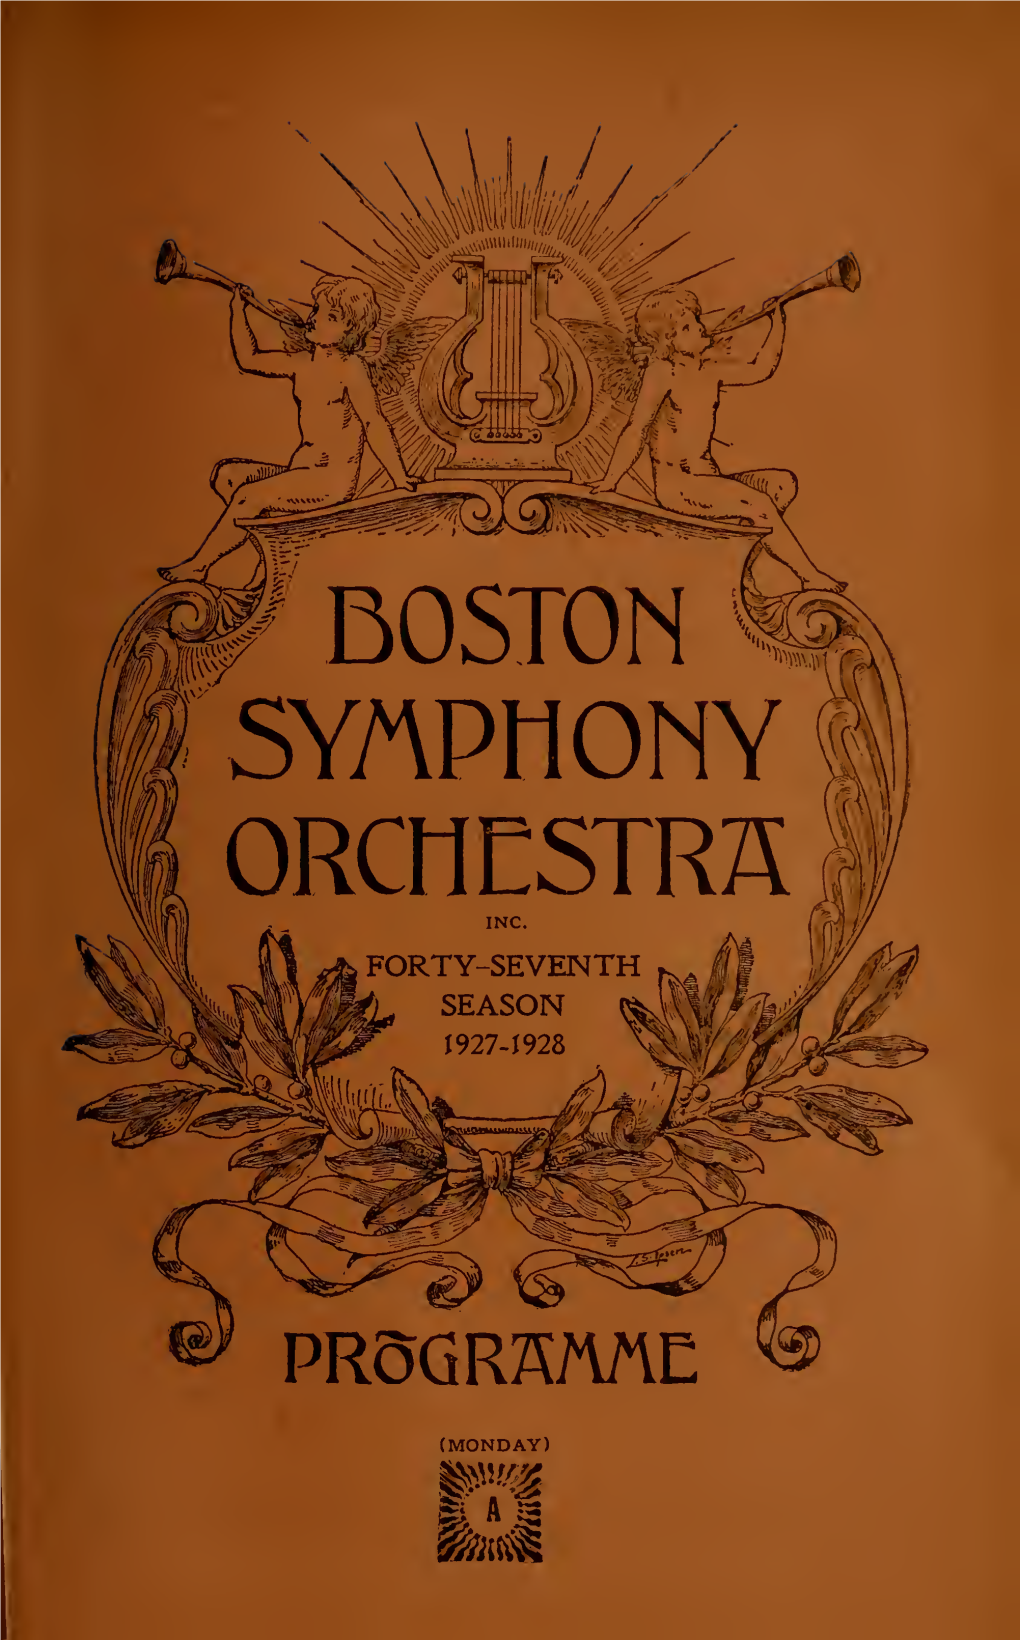 Boston Symphony Orchestra Concert Programs, Season 47,1927